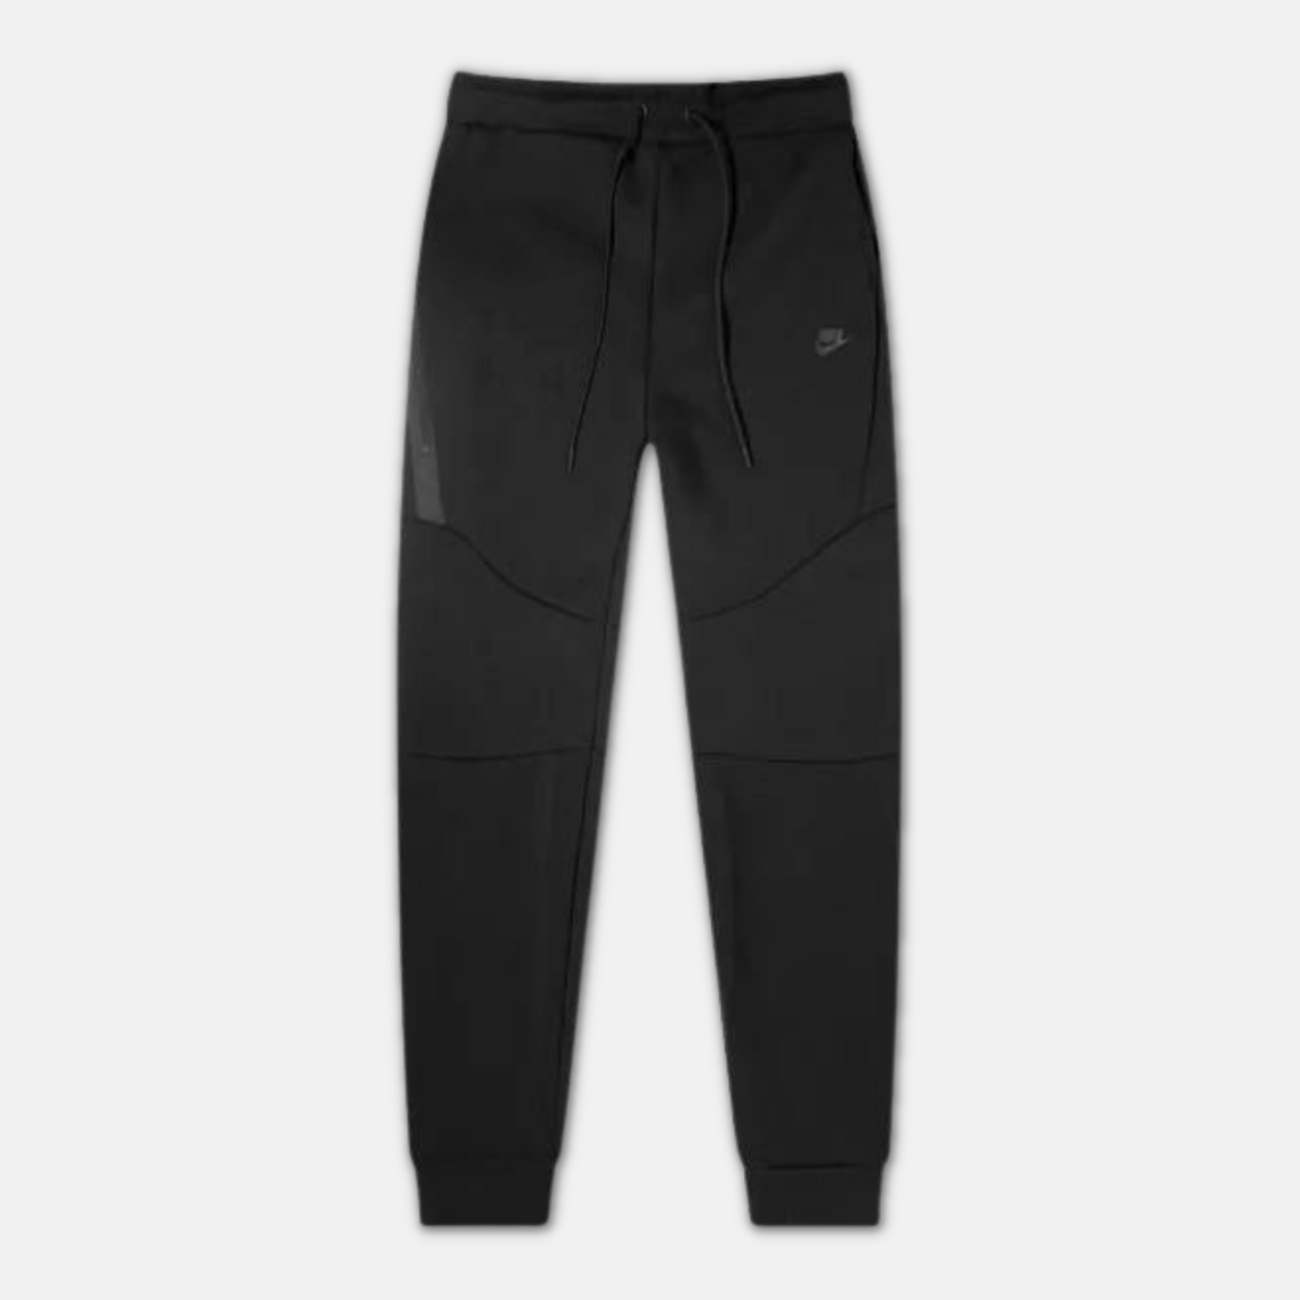 Nike Tech Fleece - Black (FULL SET)